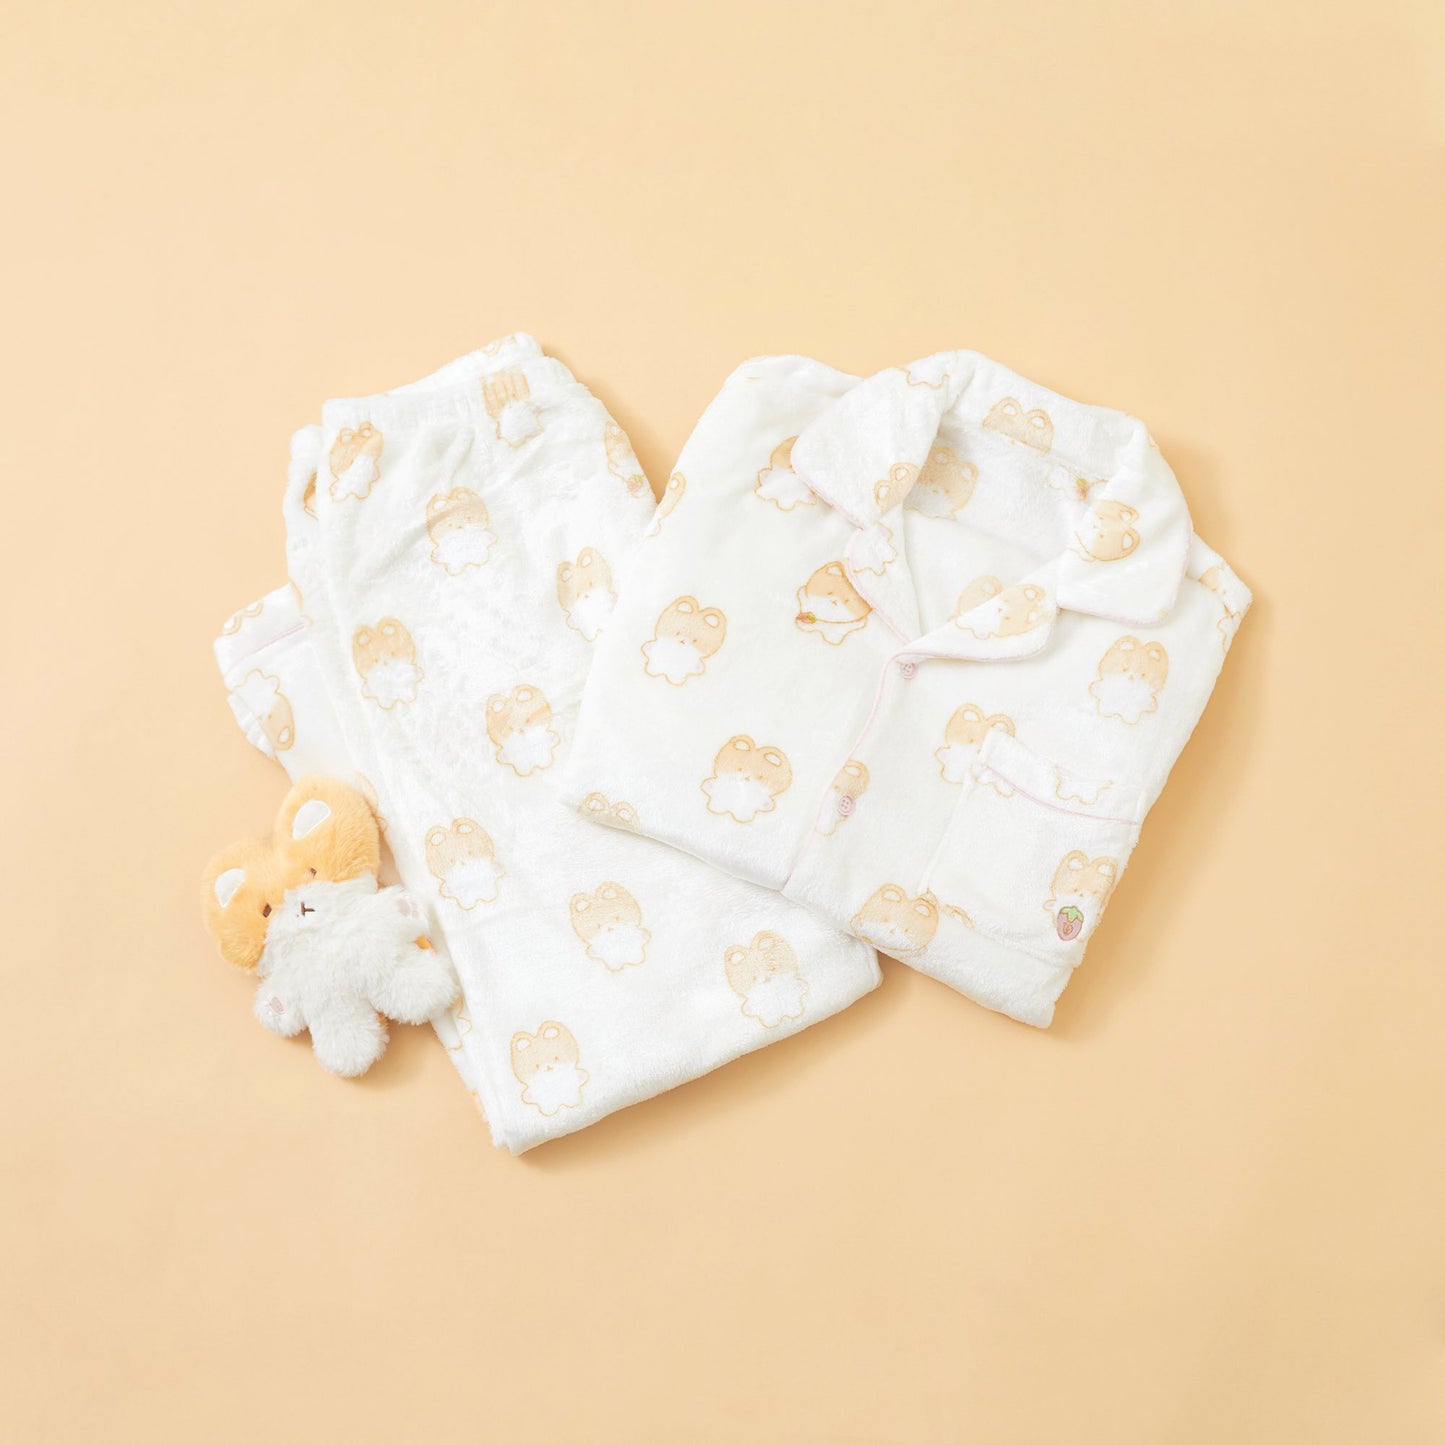 TEO-LAE-GI X SPAO Pajama Set (Fluffy Long Sleeves)